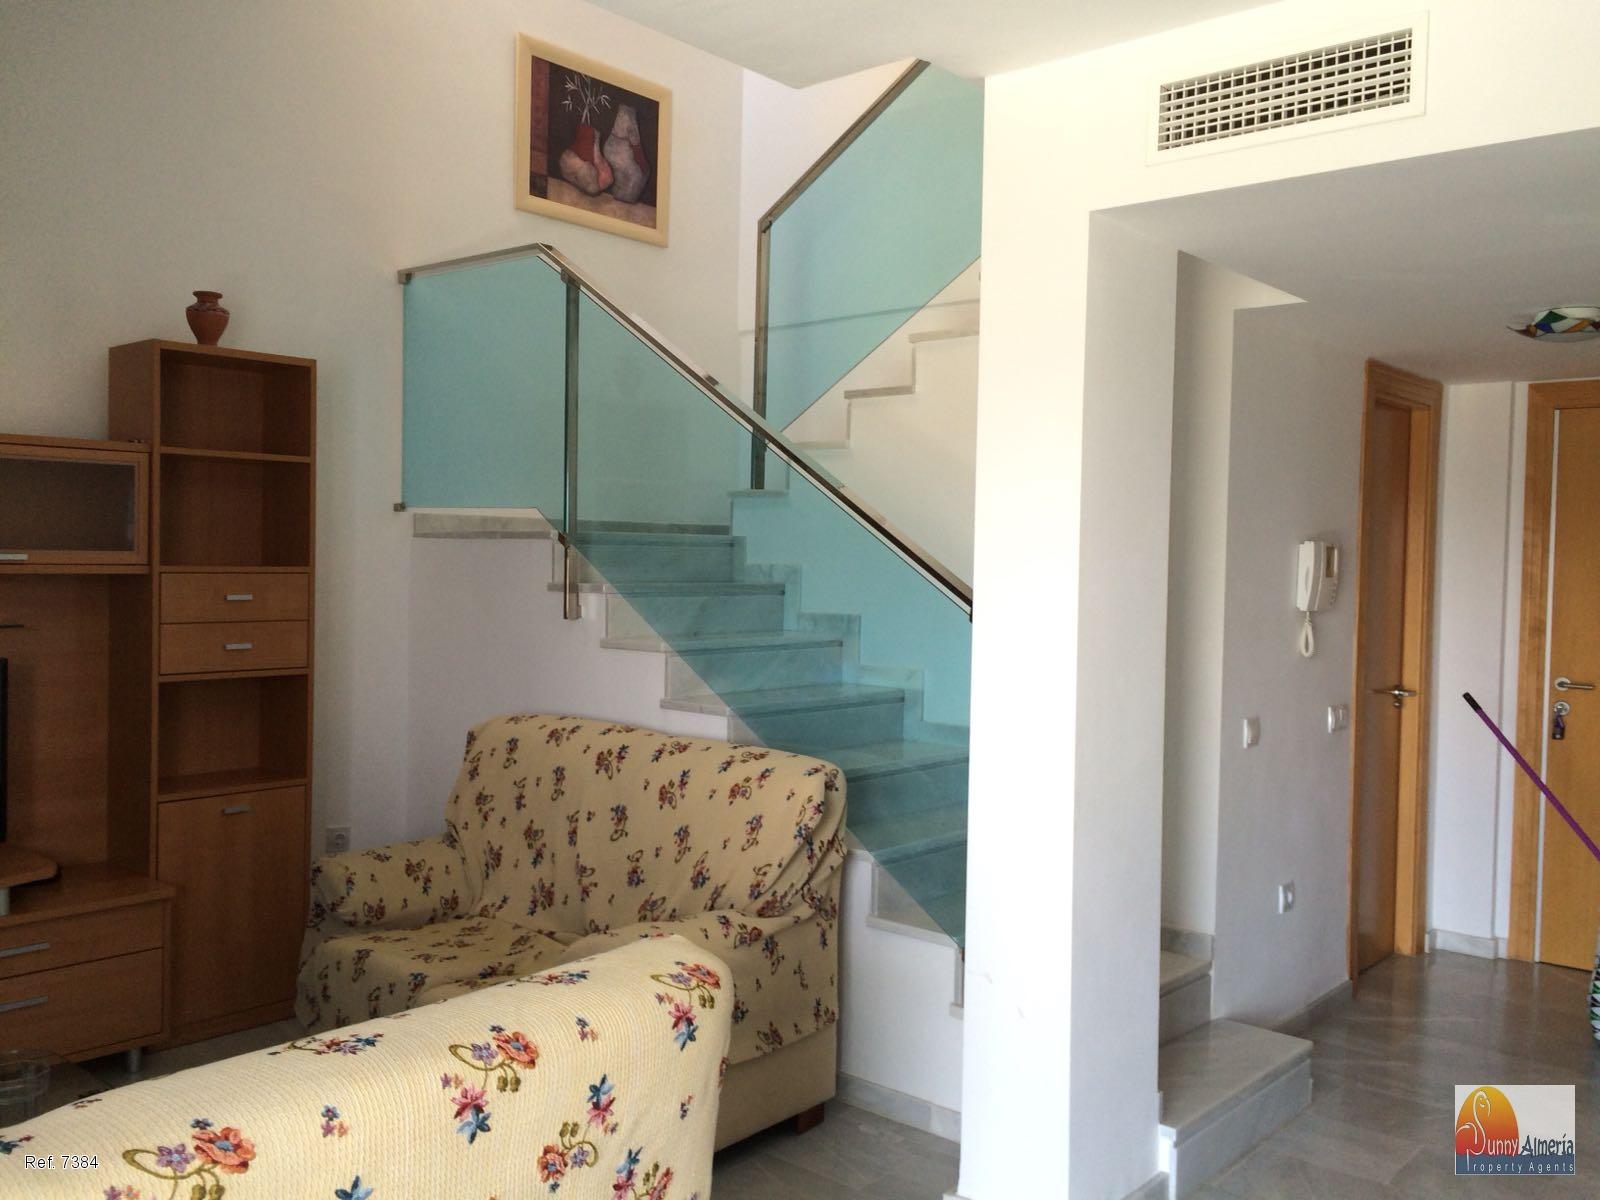 Luxury Apartment for rent in undefined unde (Roquetas de Mar), 900 €/month